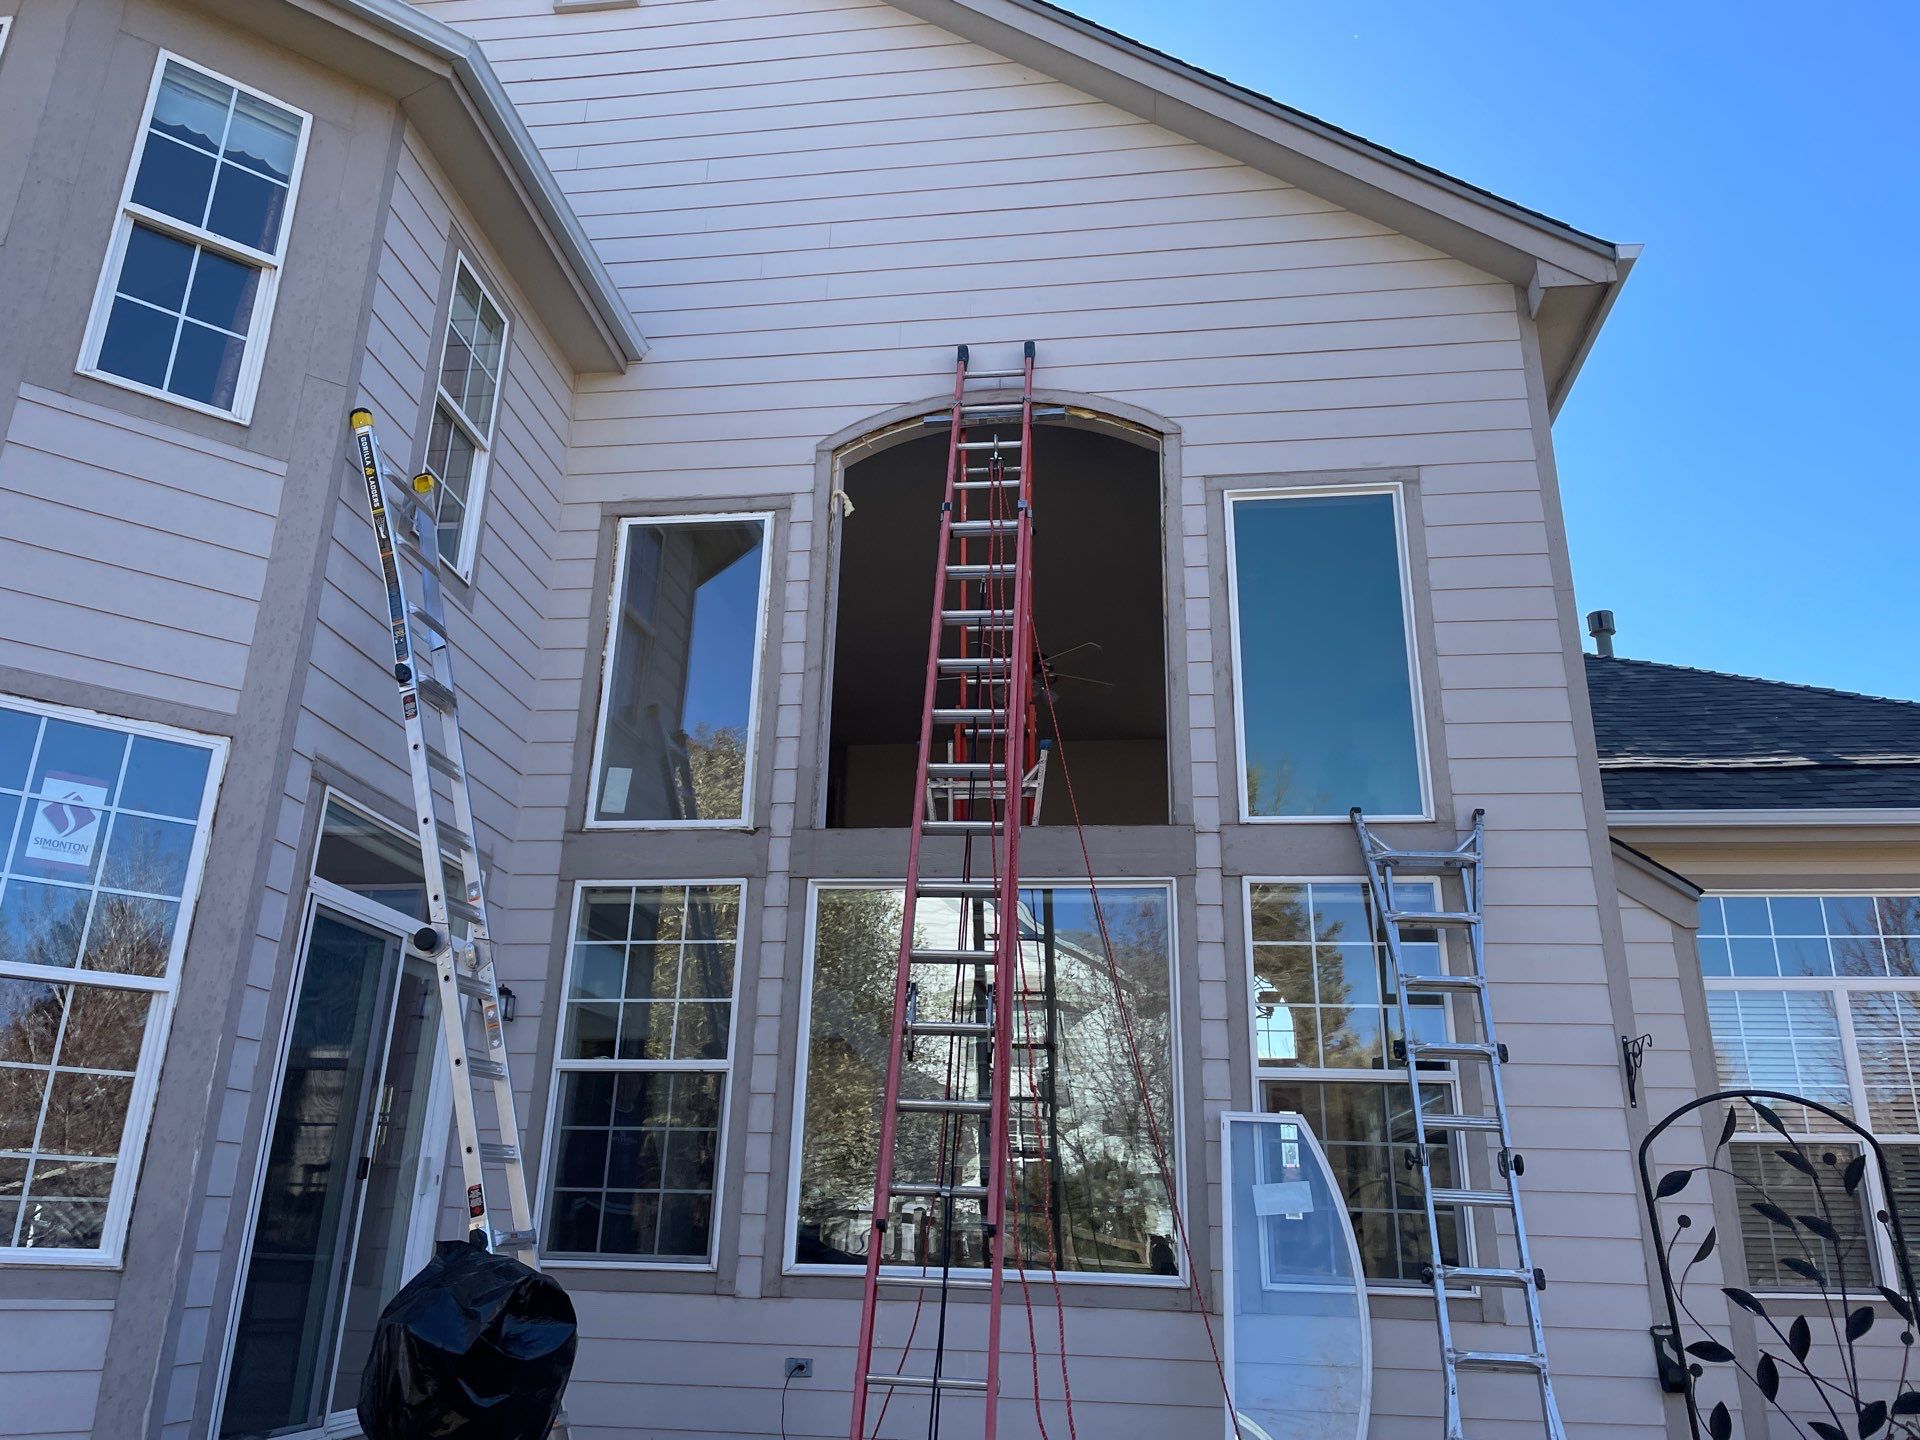 window-replacement-installation-in-progress